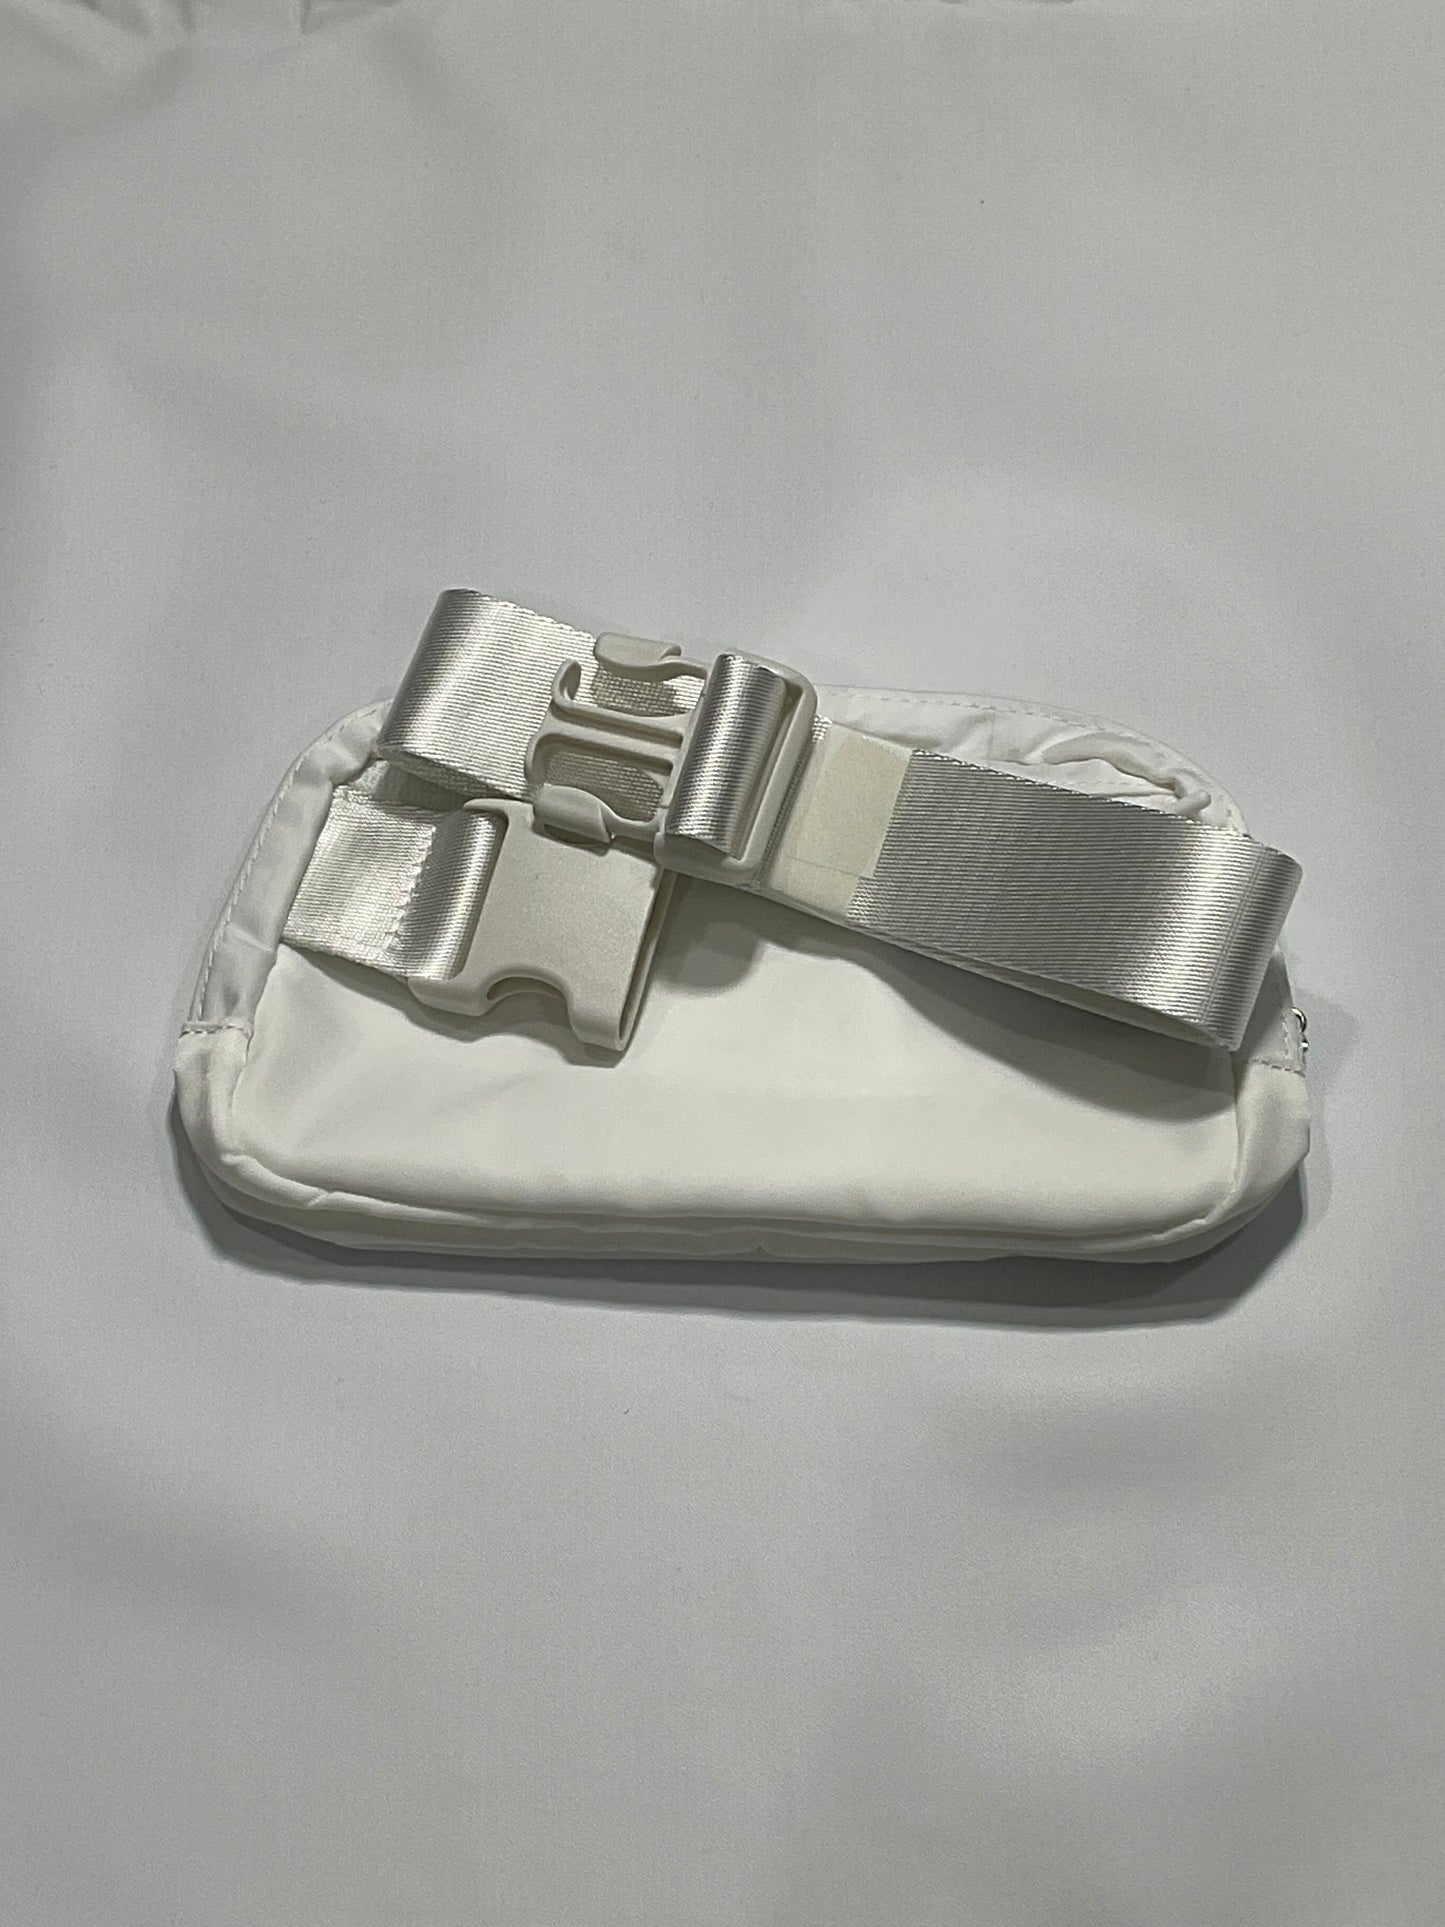 Lululemon Everywhere Belt Bag 1L - White